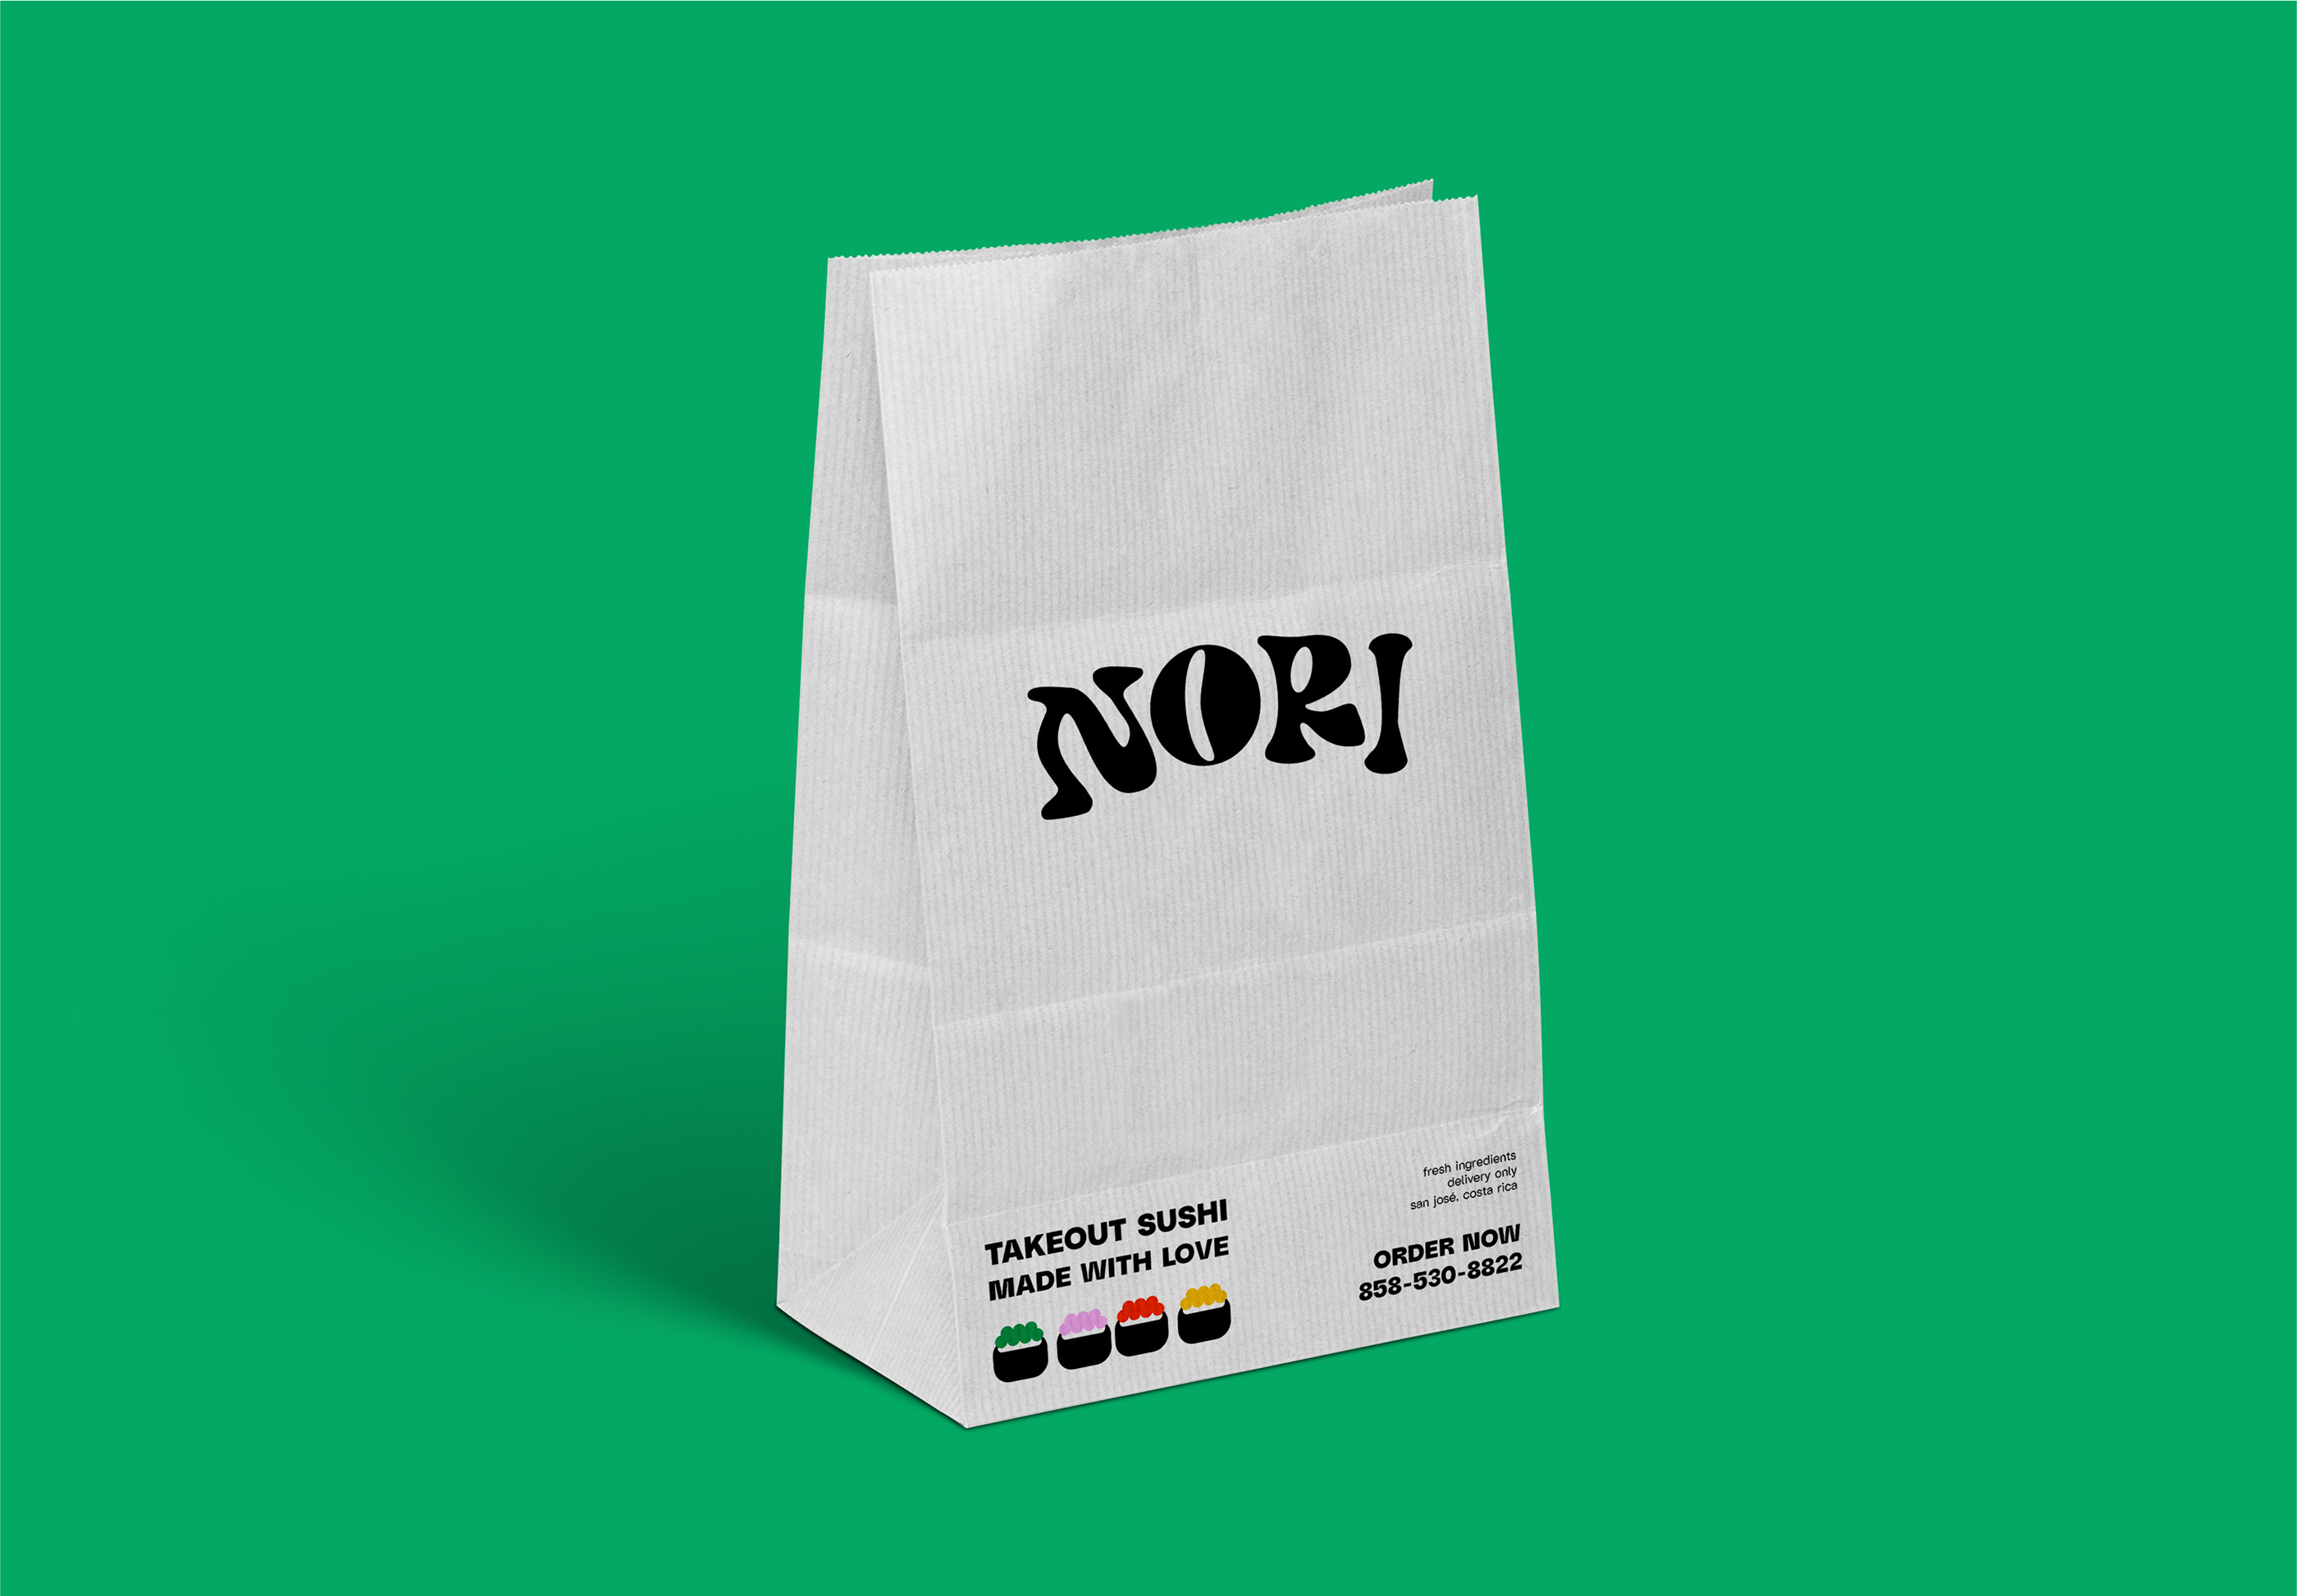 Nori. Concept of a sushi restaurant